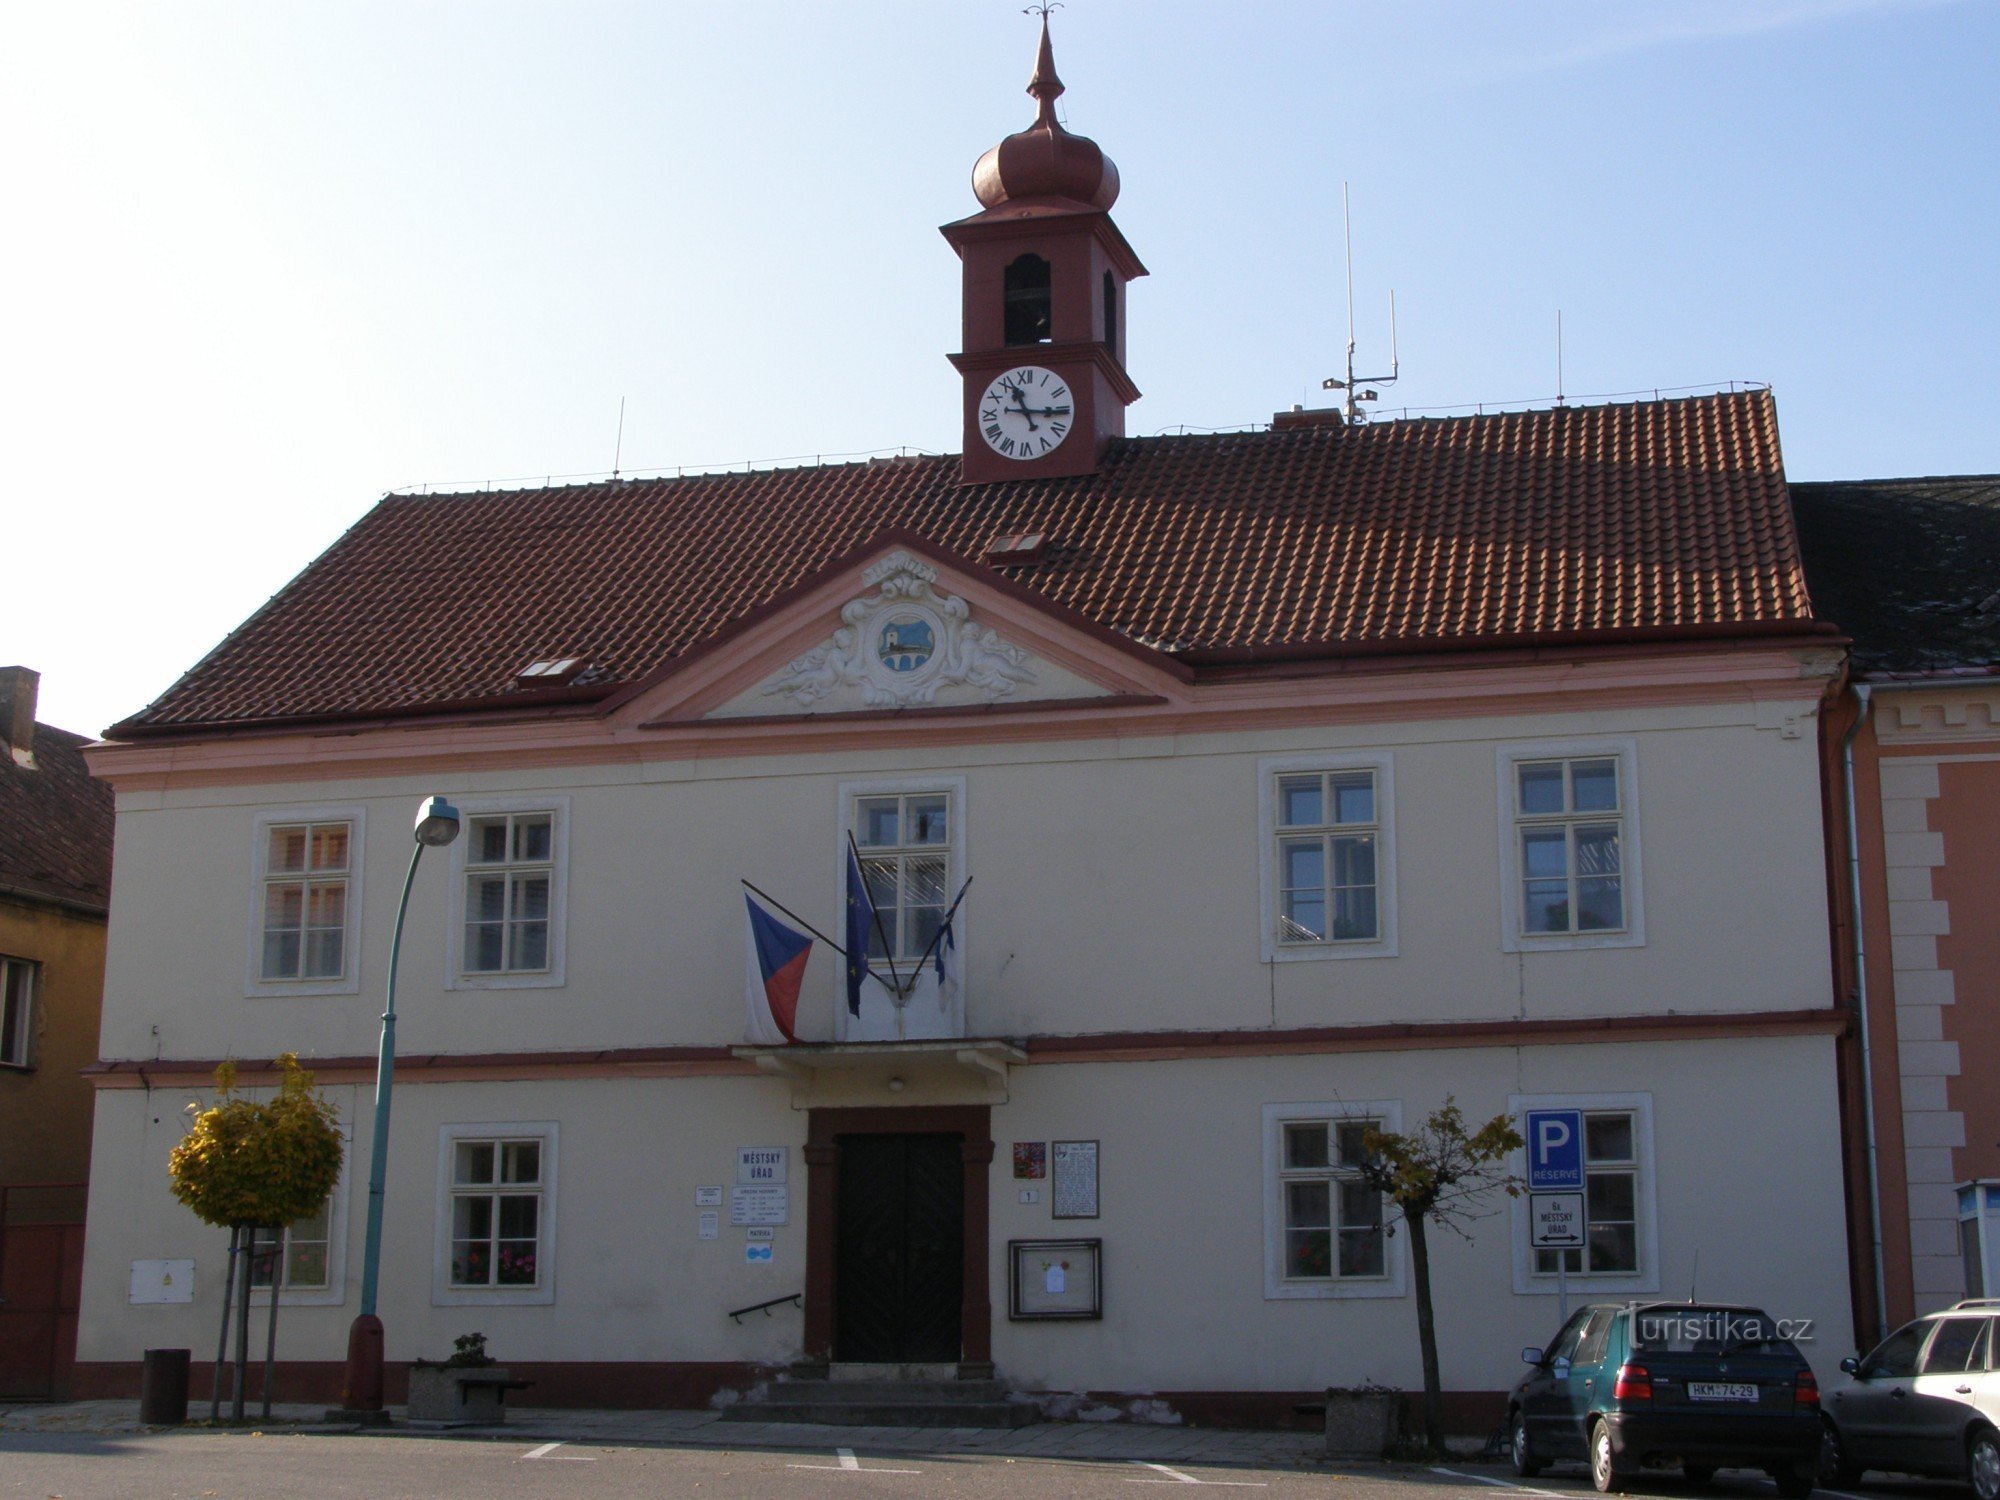 Týnec nad Labem - Rådhus nr. 1